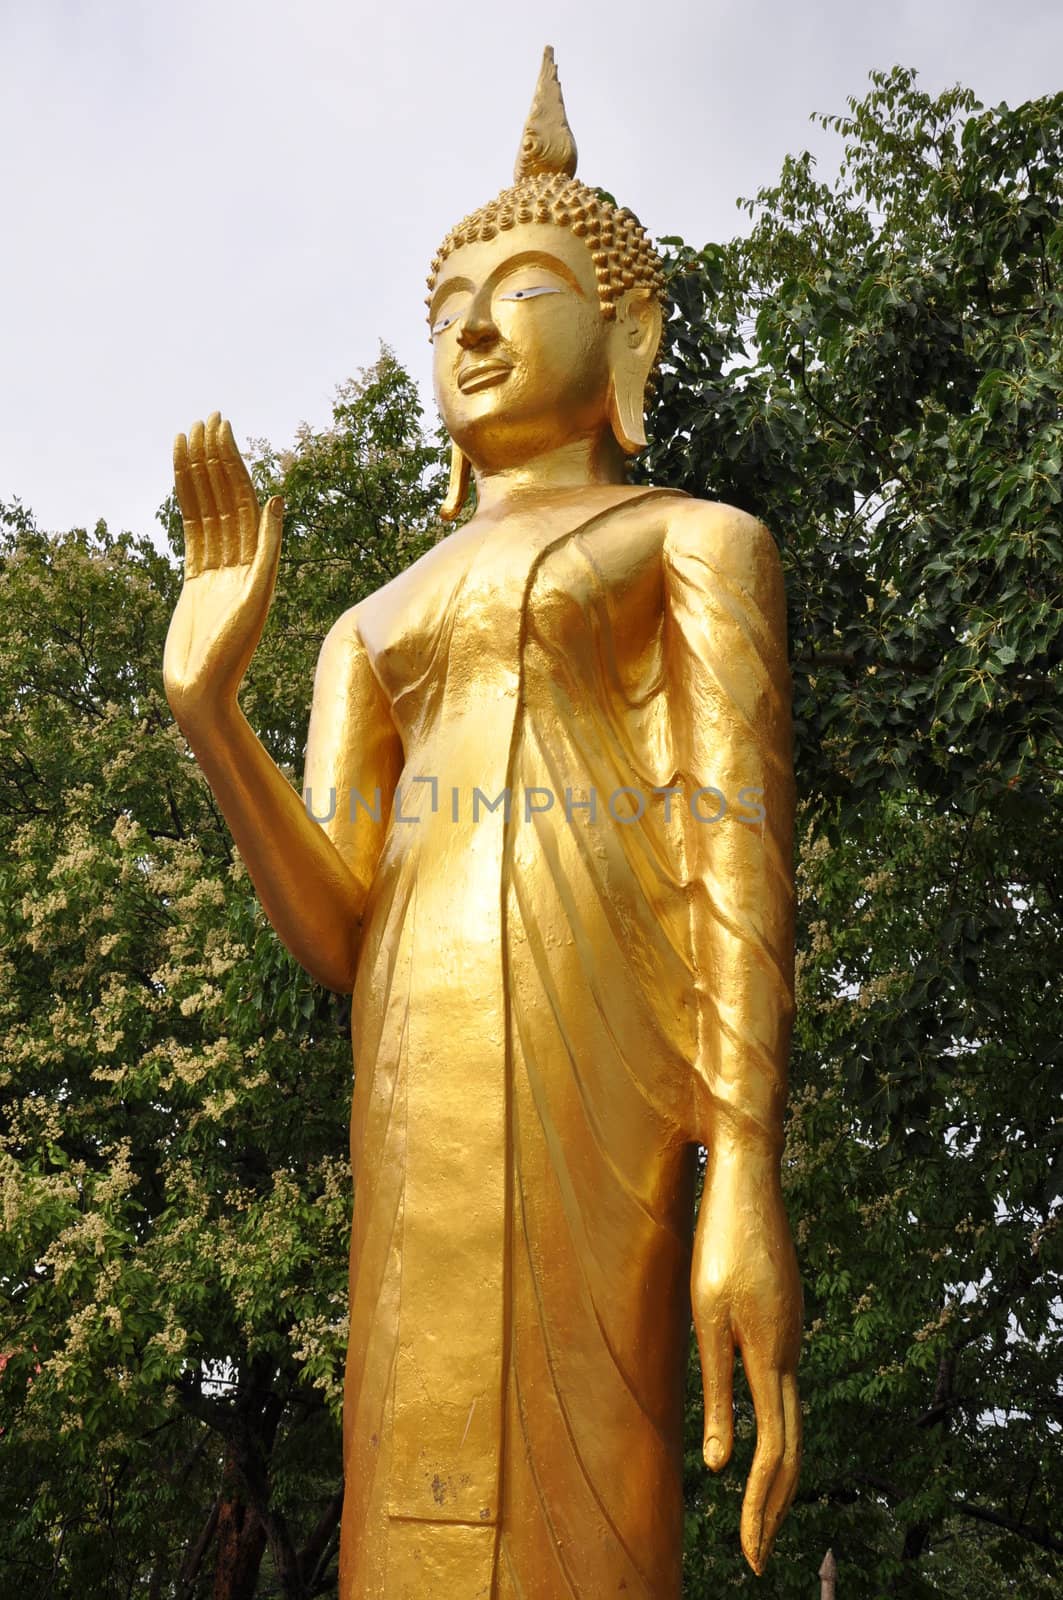 The Big Buddha site in Pattaya, Thailand